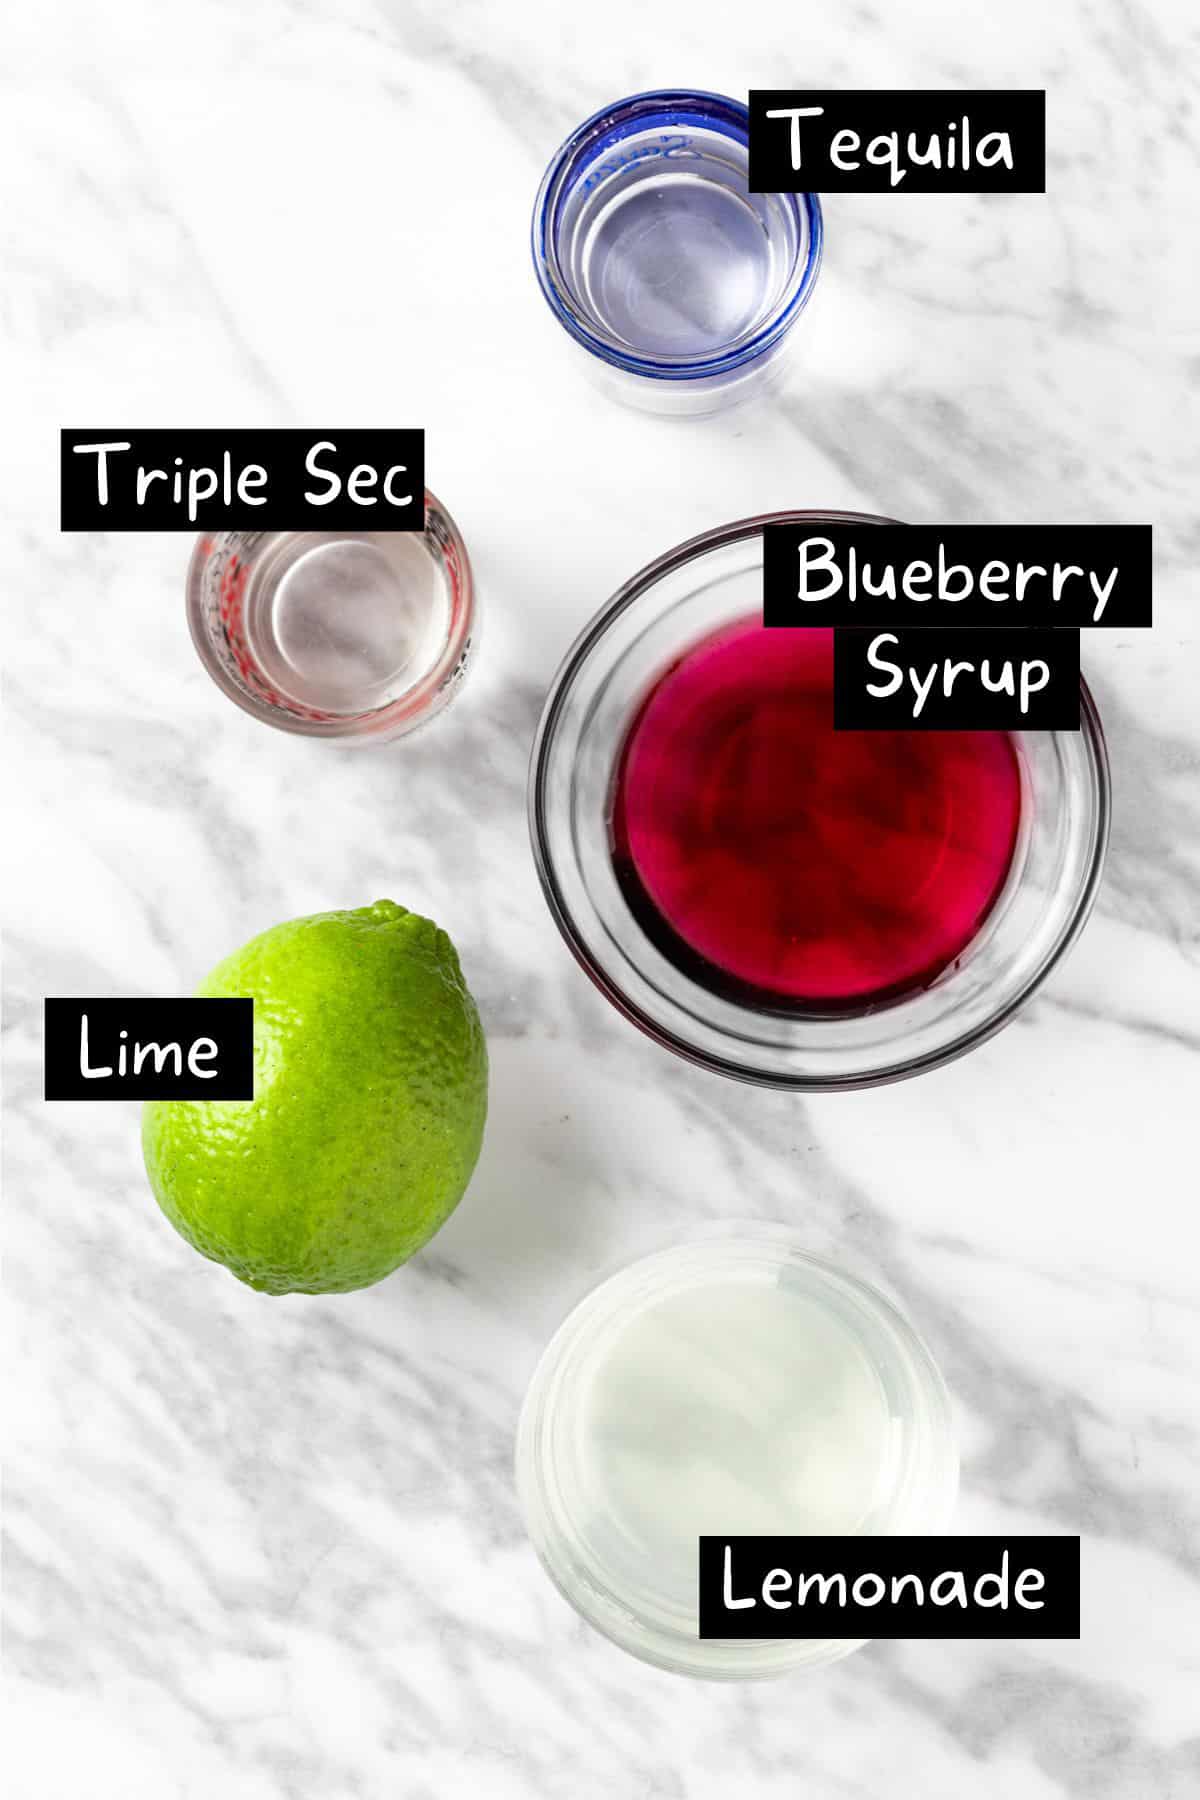 The ingredients needed to make the blueberry lemonade margarita.